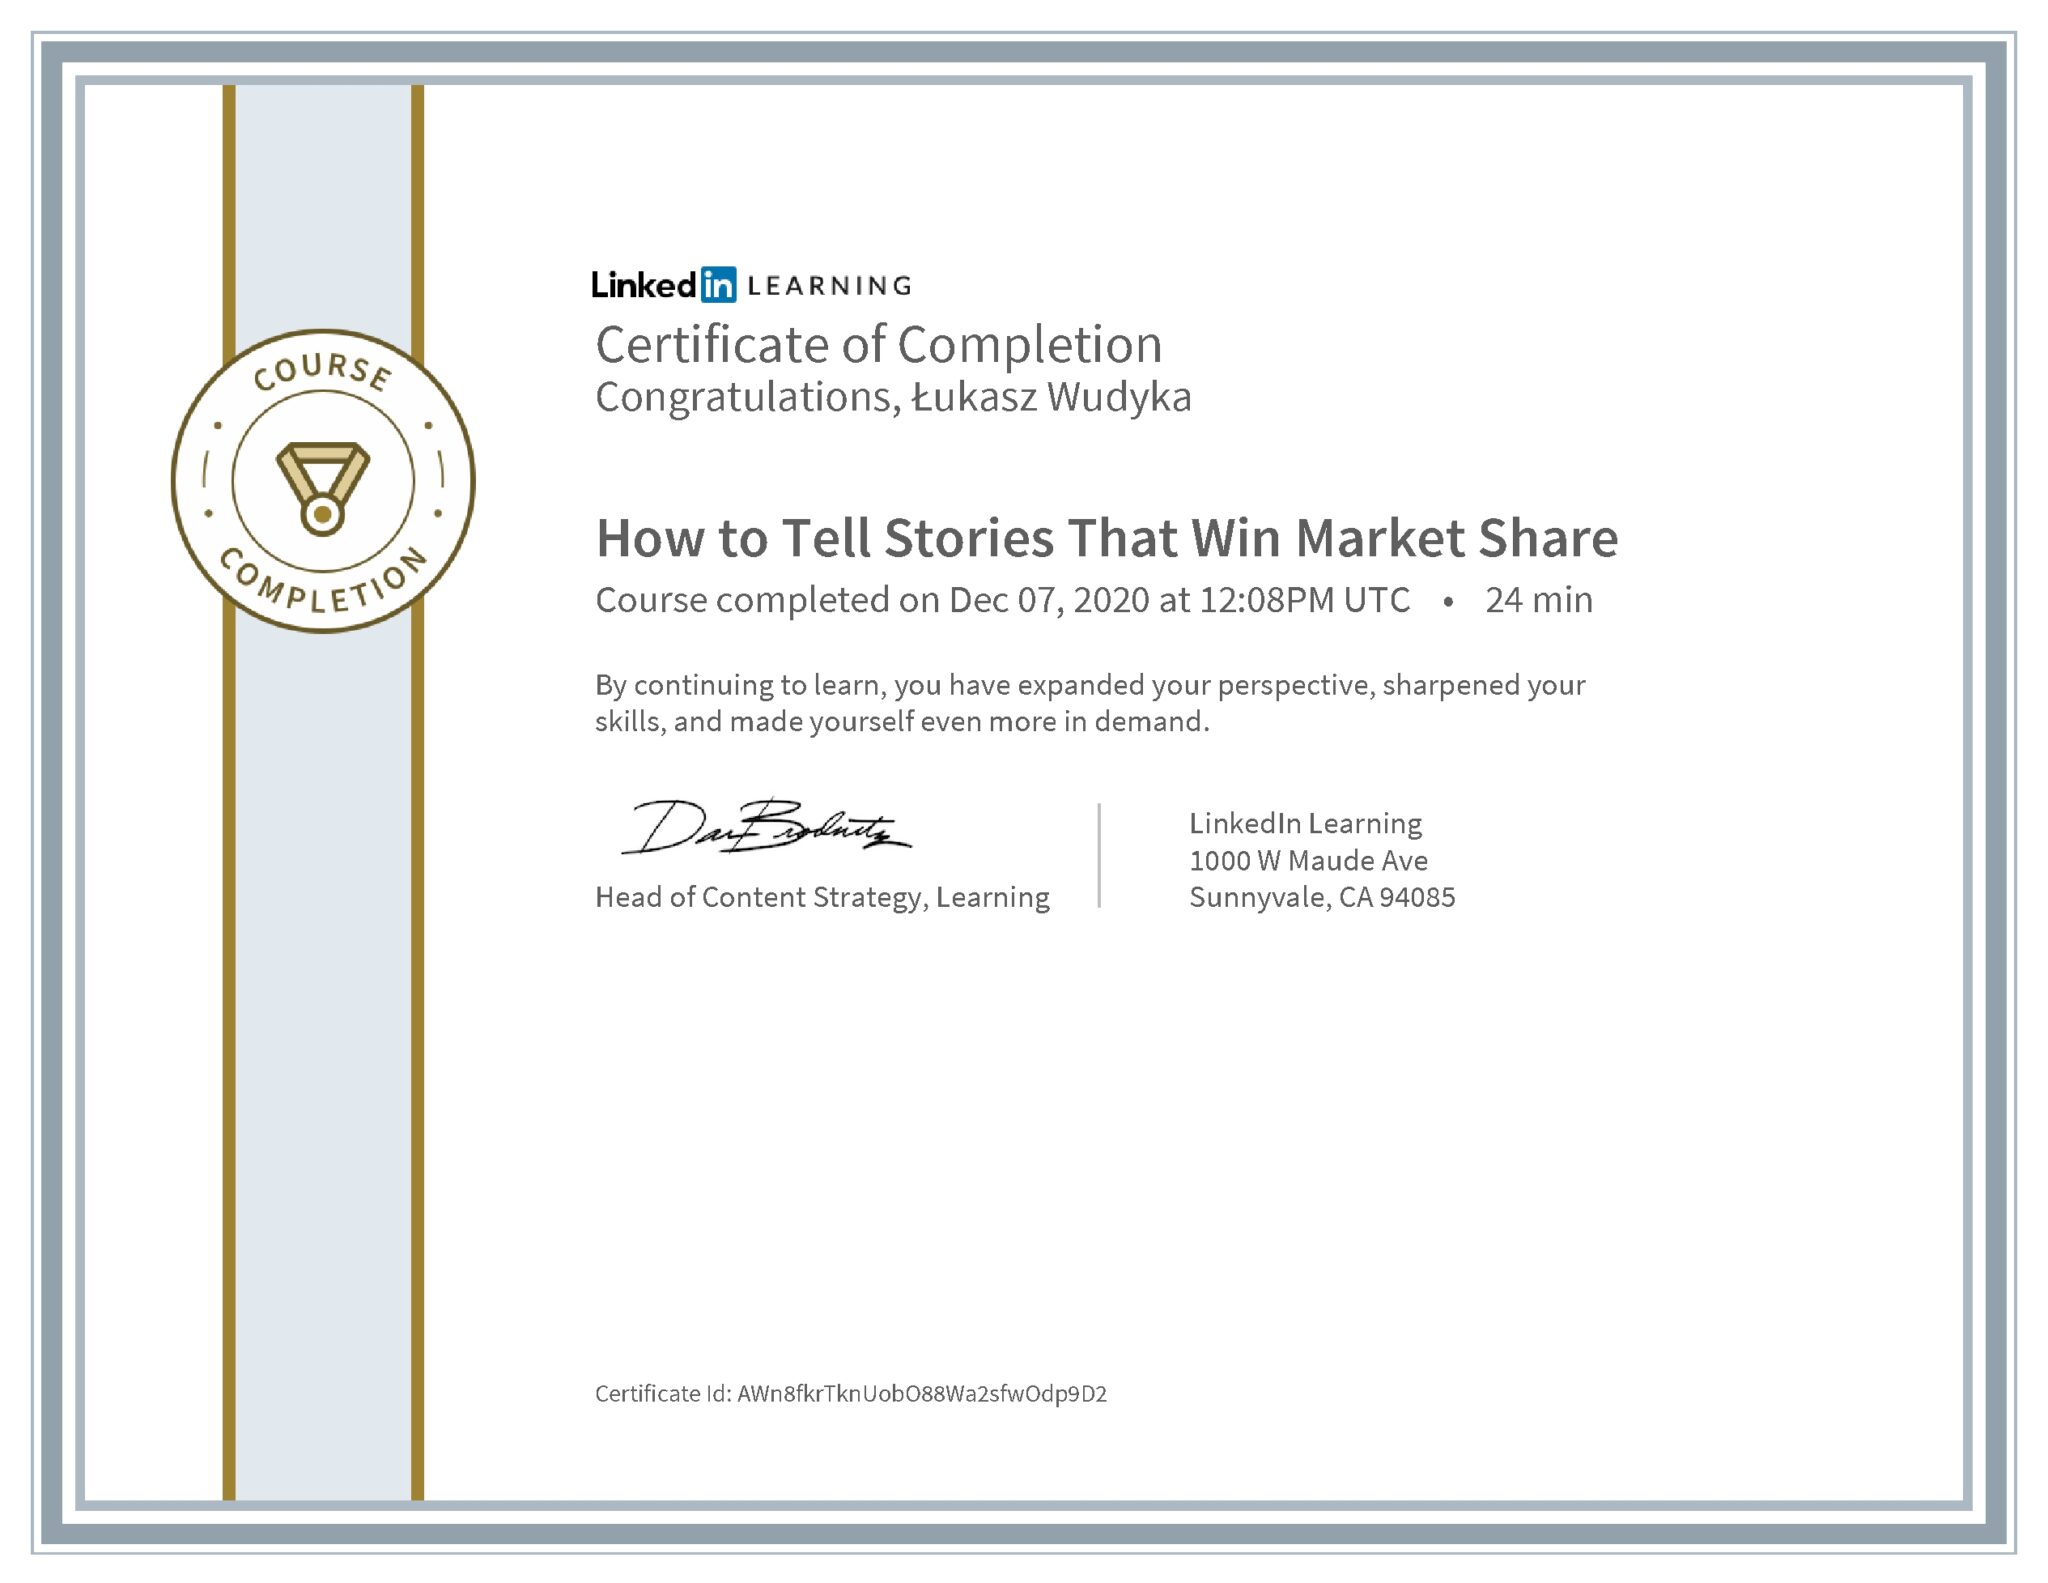 Łukasz Wudyka certyfikat LinkedIn How to Tell Stories That Win Market Share